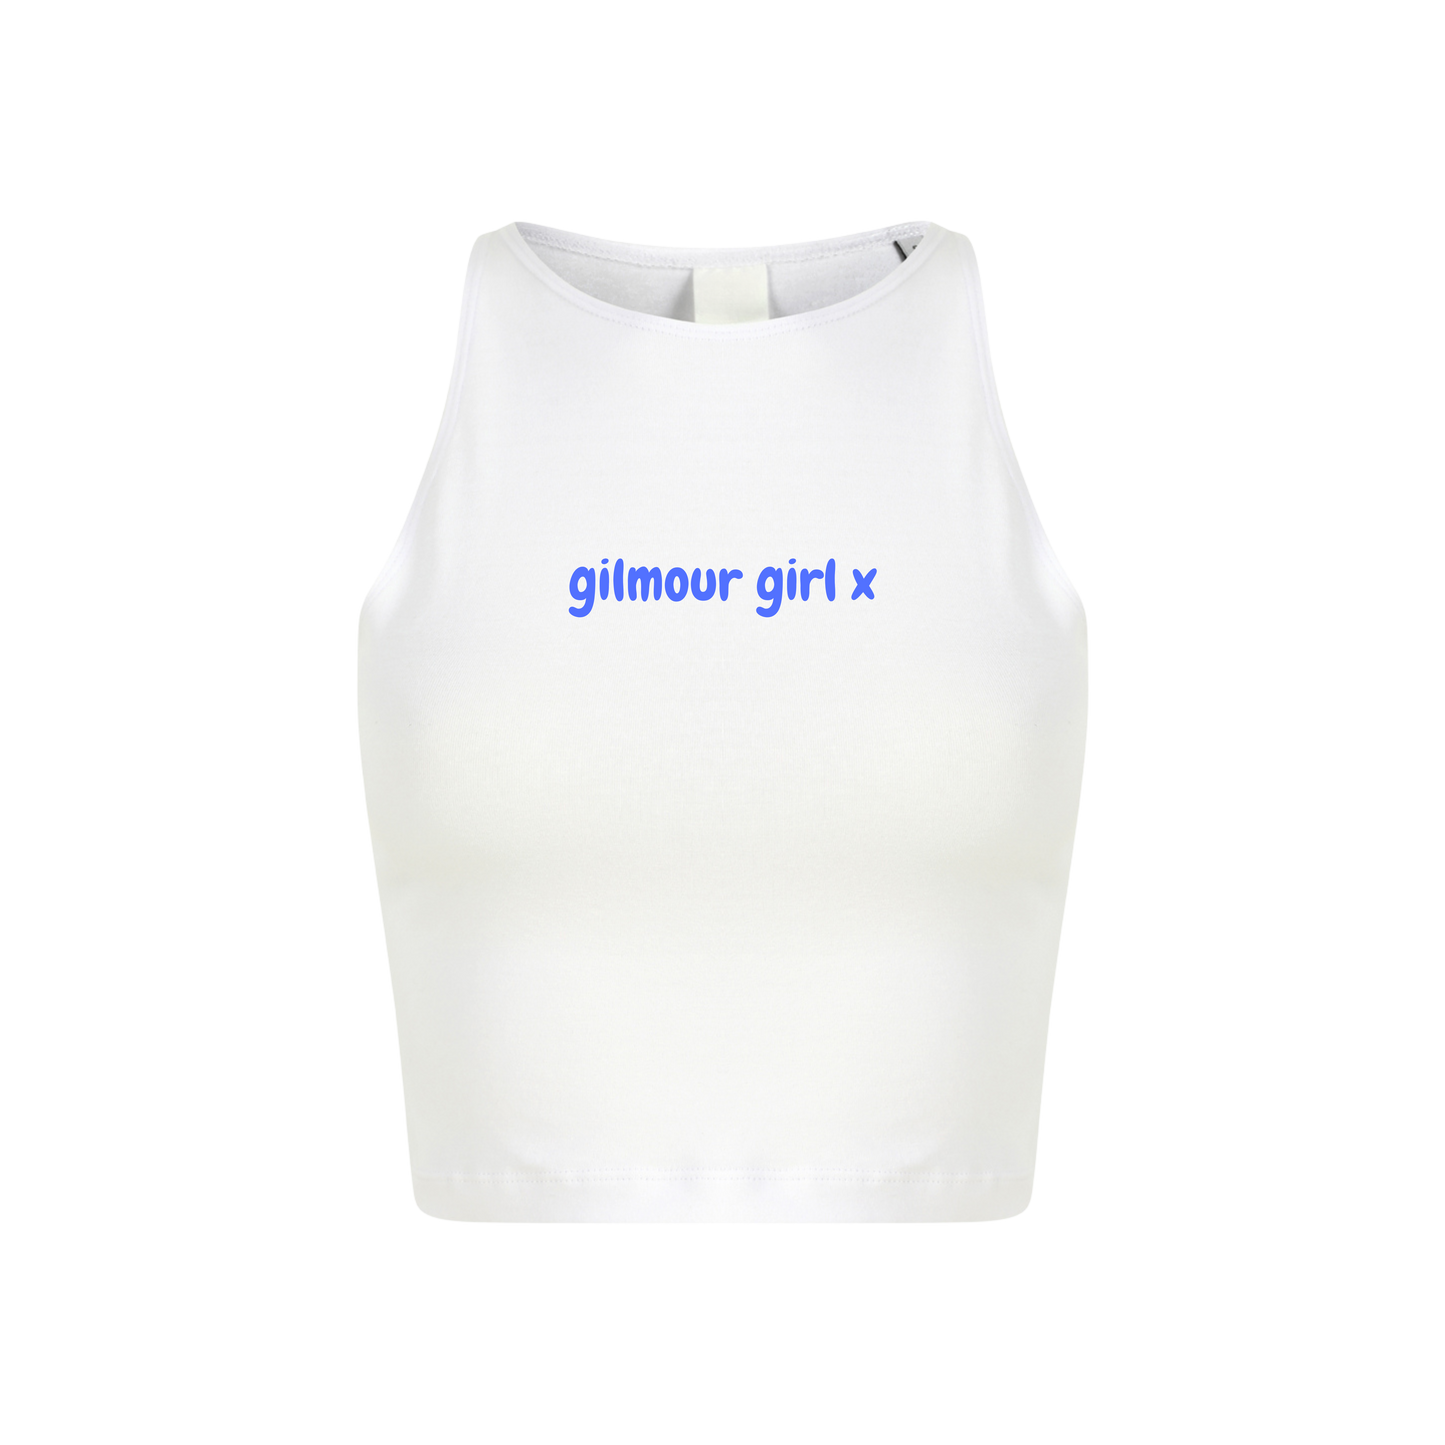 Gilmour Girl Crop Top